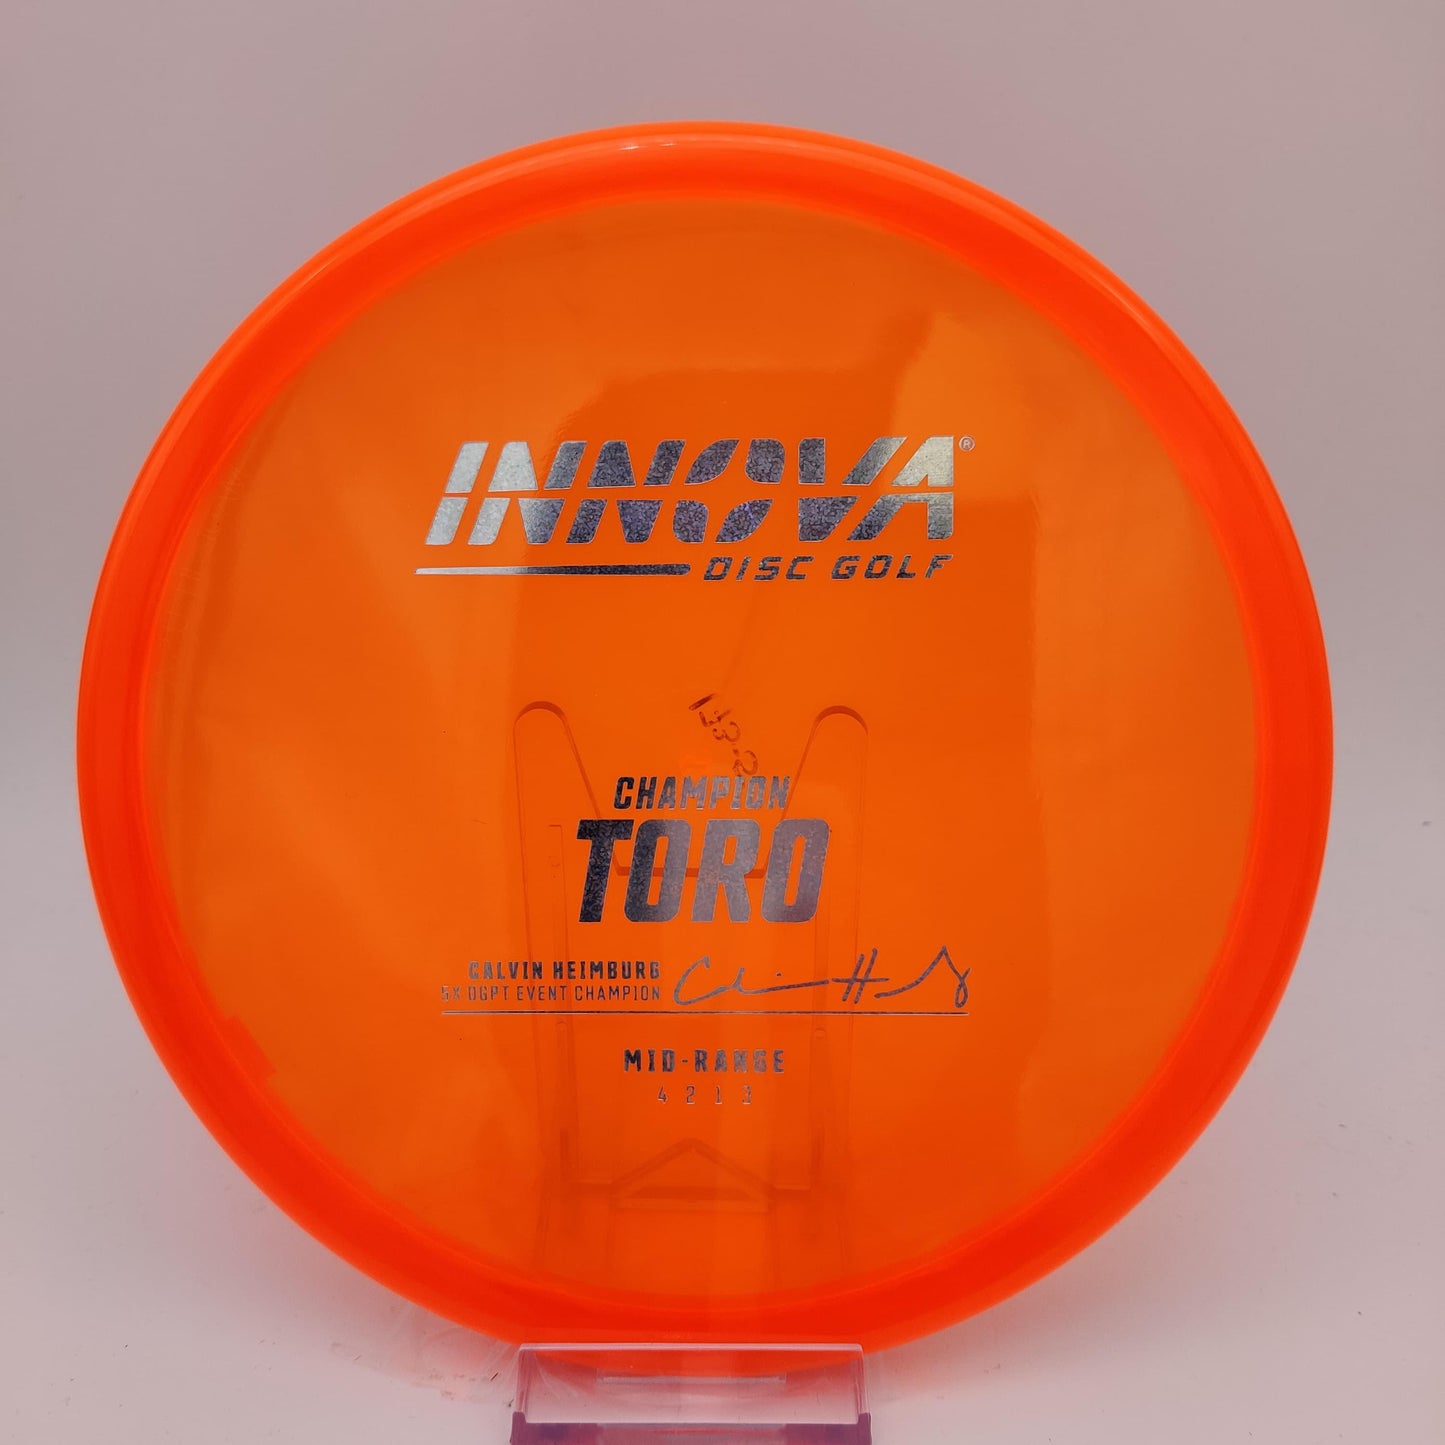 Innova Calvin Heimburg Champion Toro - Disc Golf Deals USA